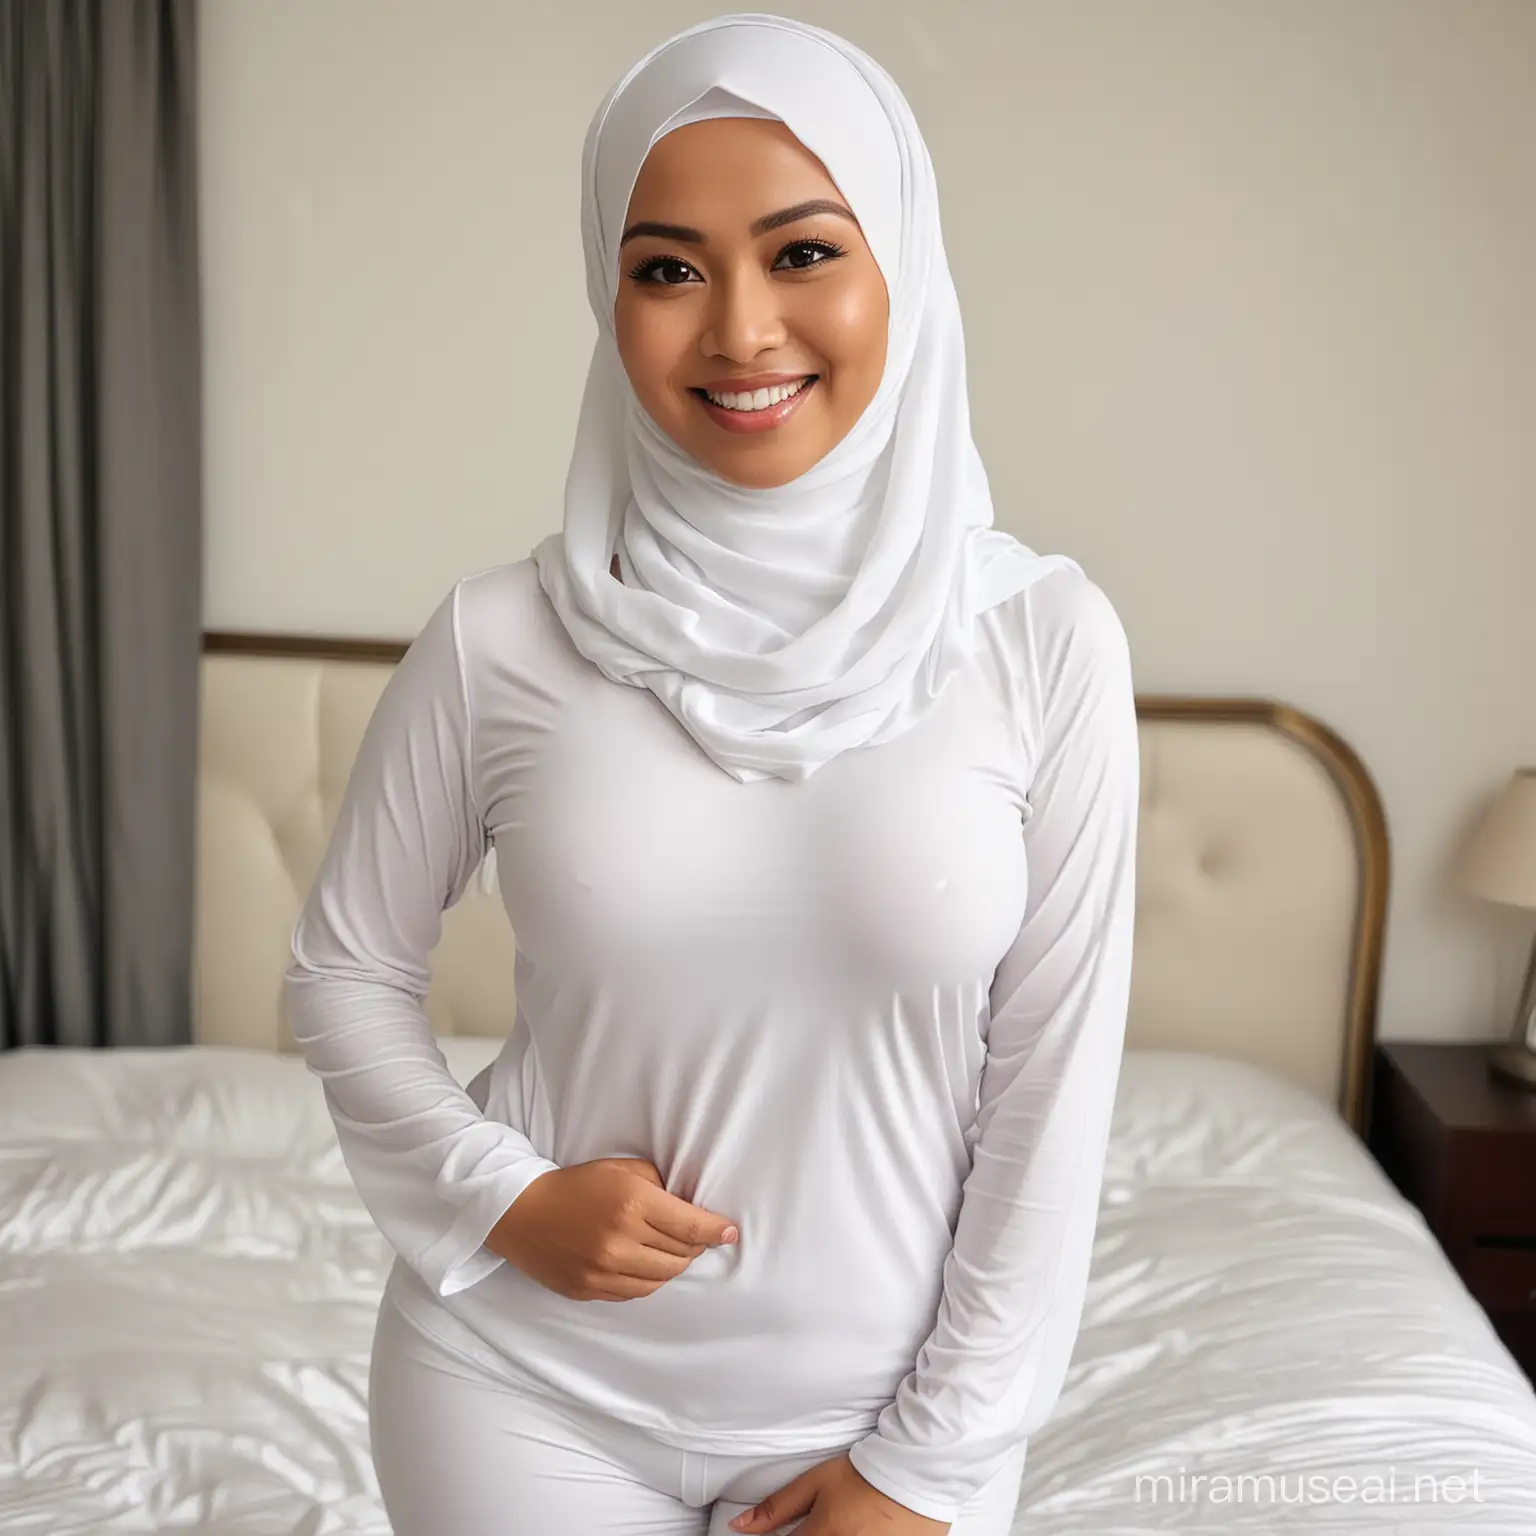 Stylish Malaysian Malay Woman in White Tight Pyjamas and Hijab Smiling at Camera